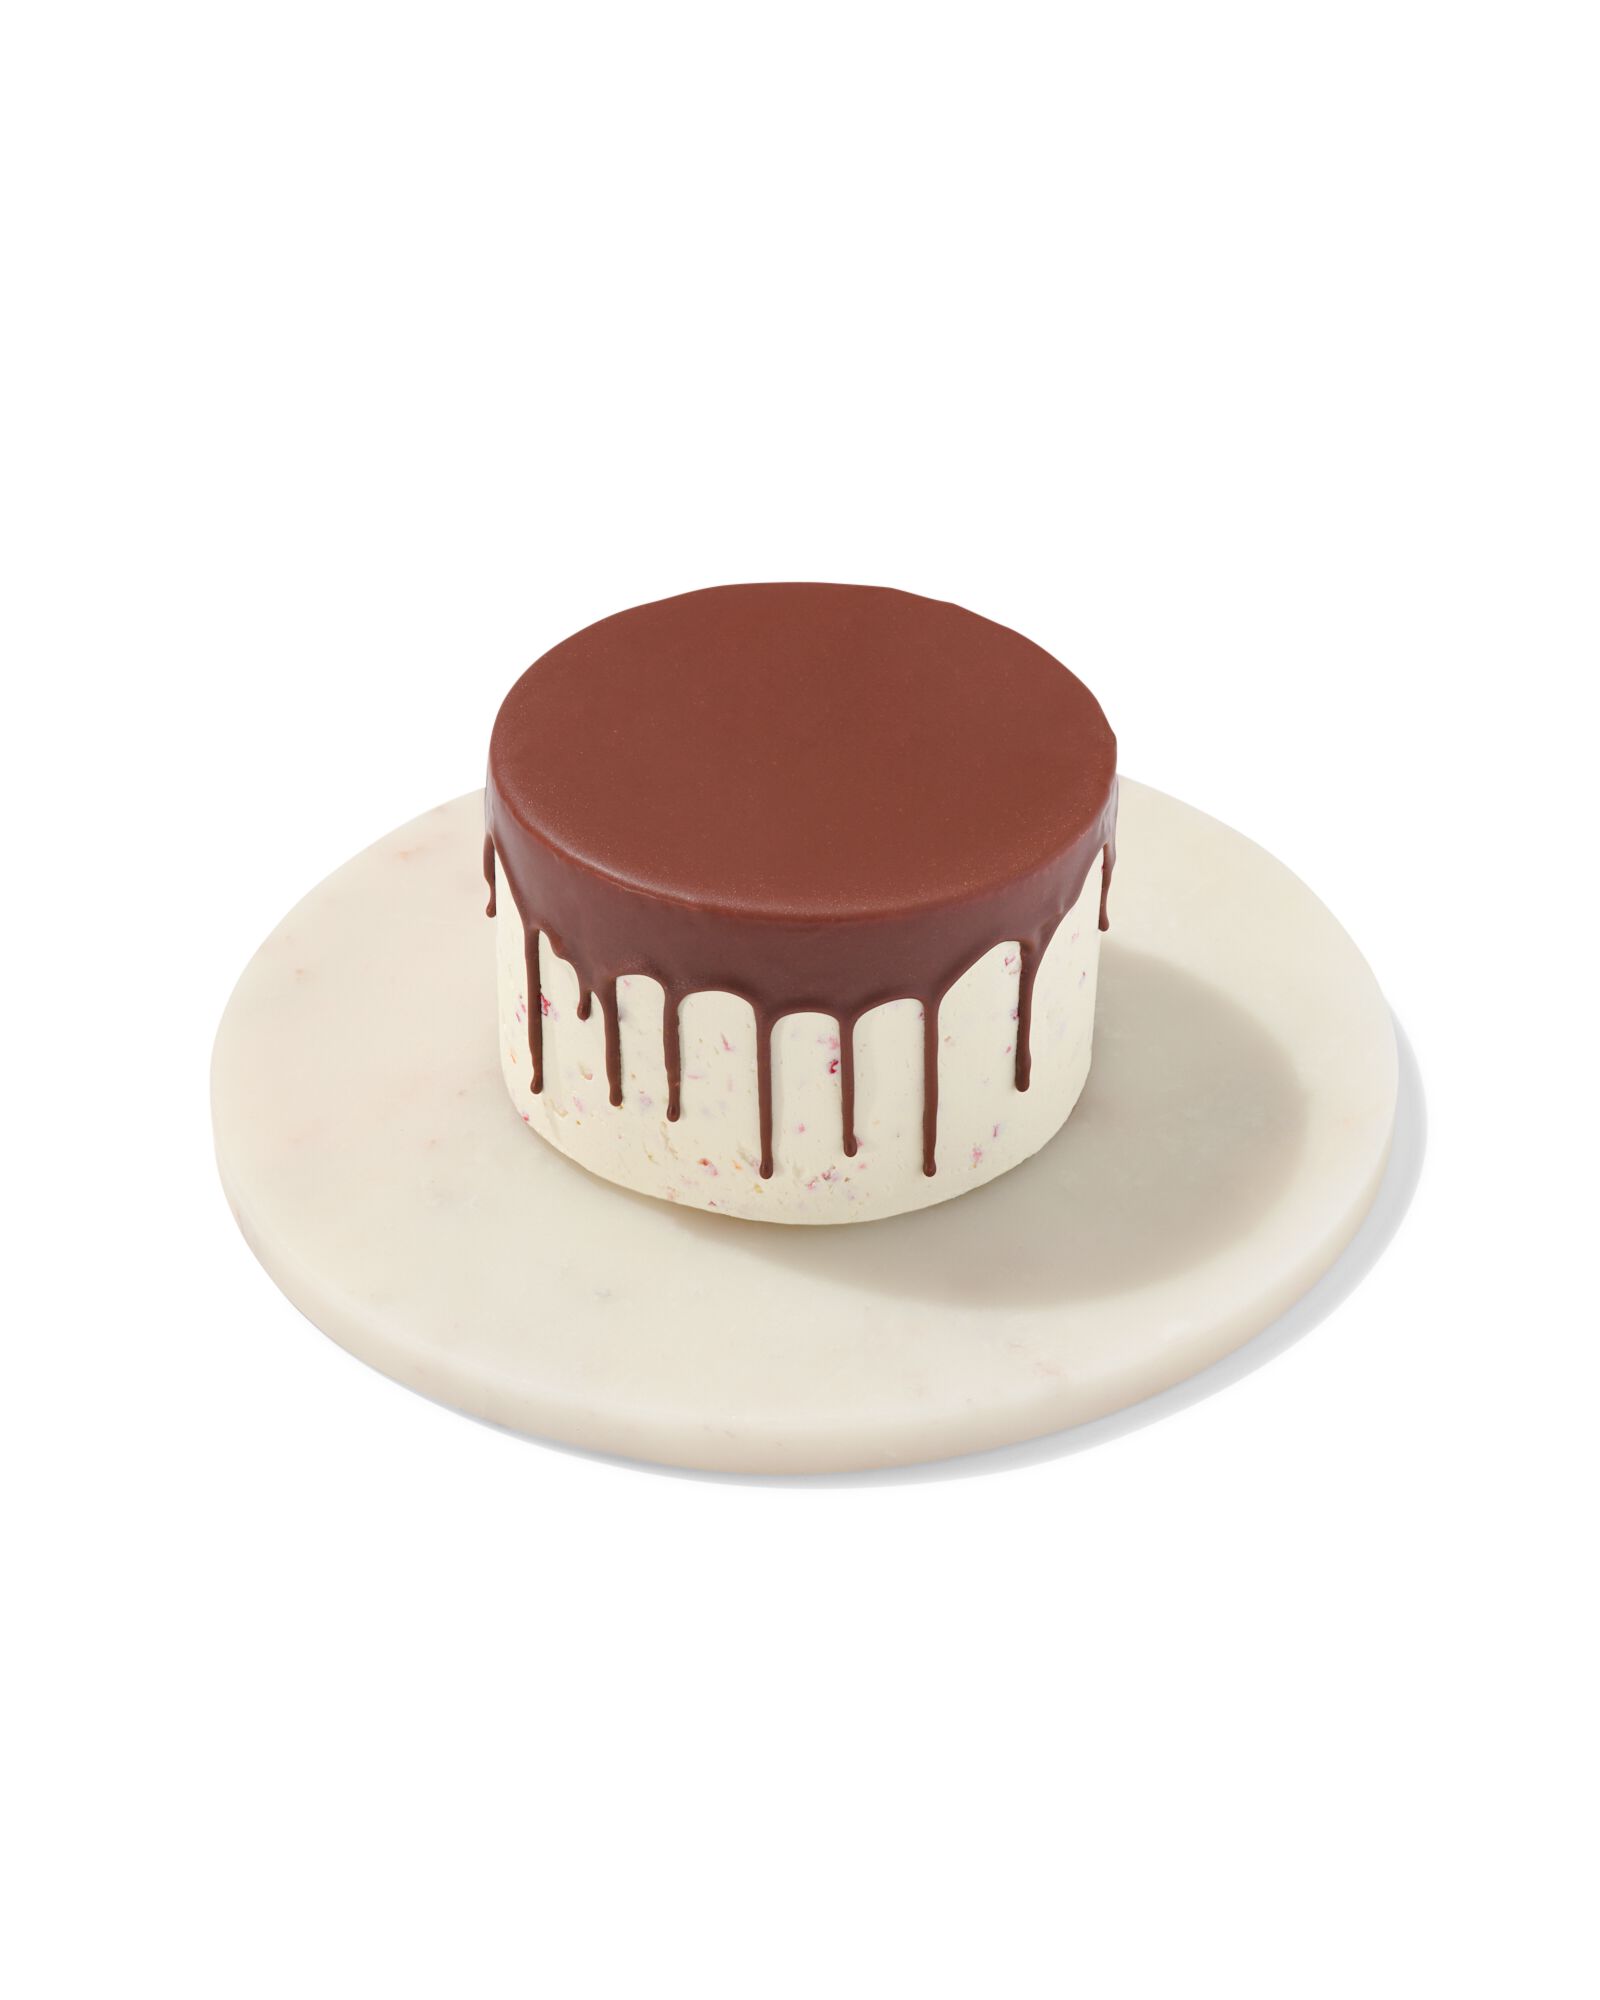 dripcake chocolade drie kleuren 8 p. - 6330053 - HEMA